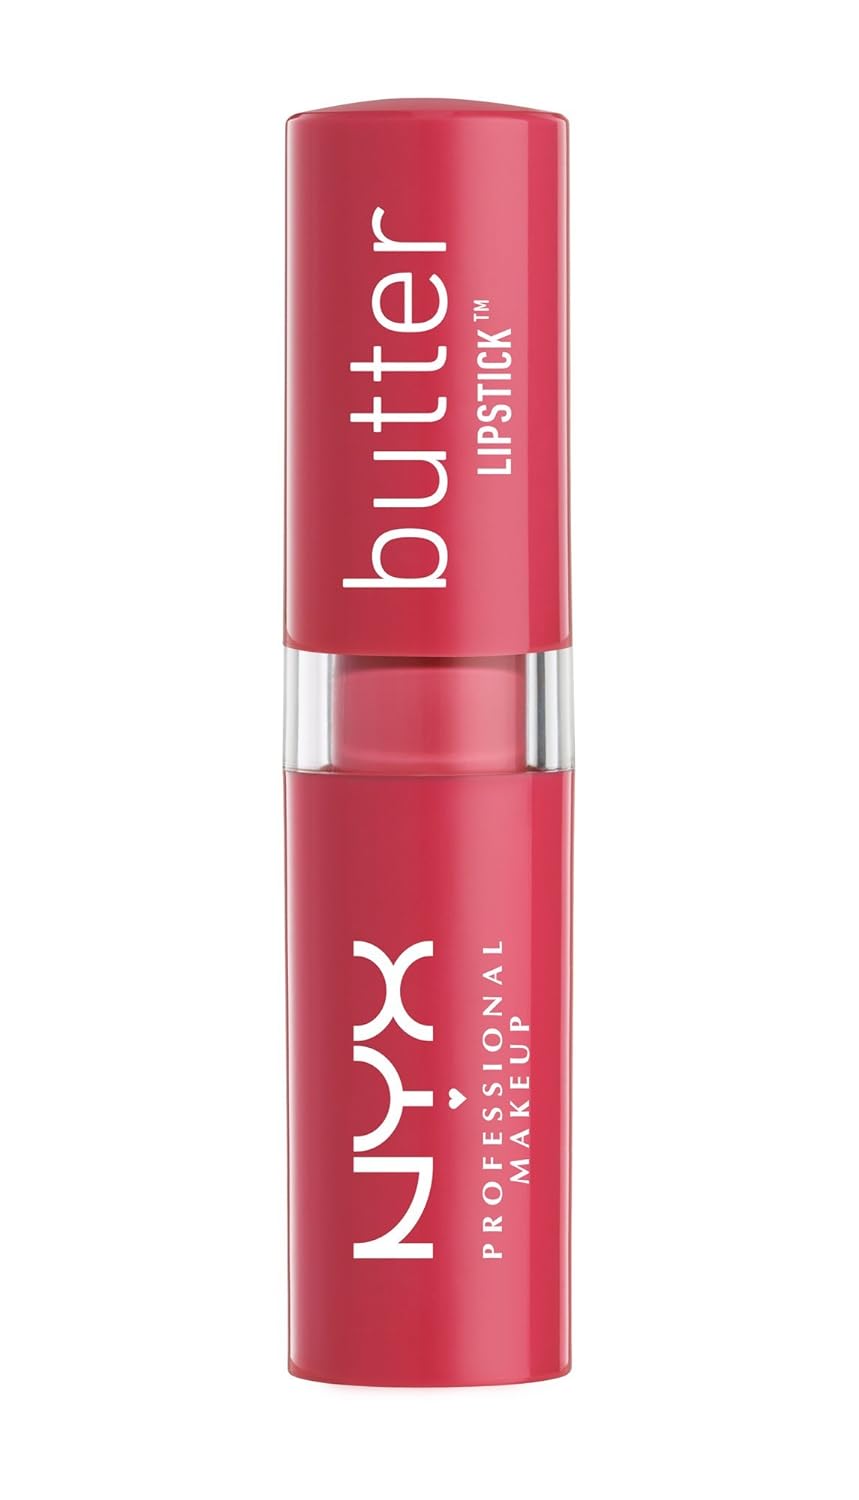 Nyx Professional Makeup Butter Lipstick, Fruit Punch